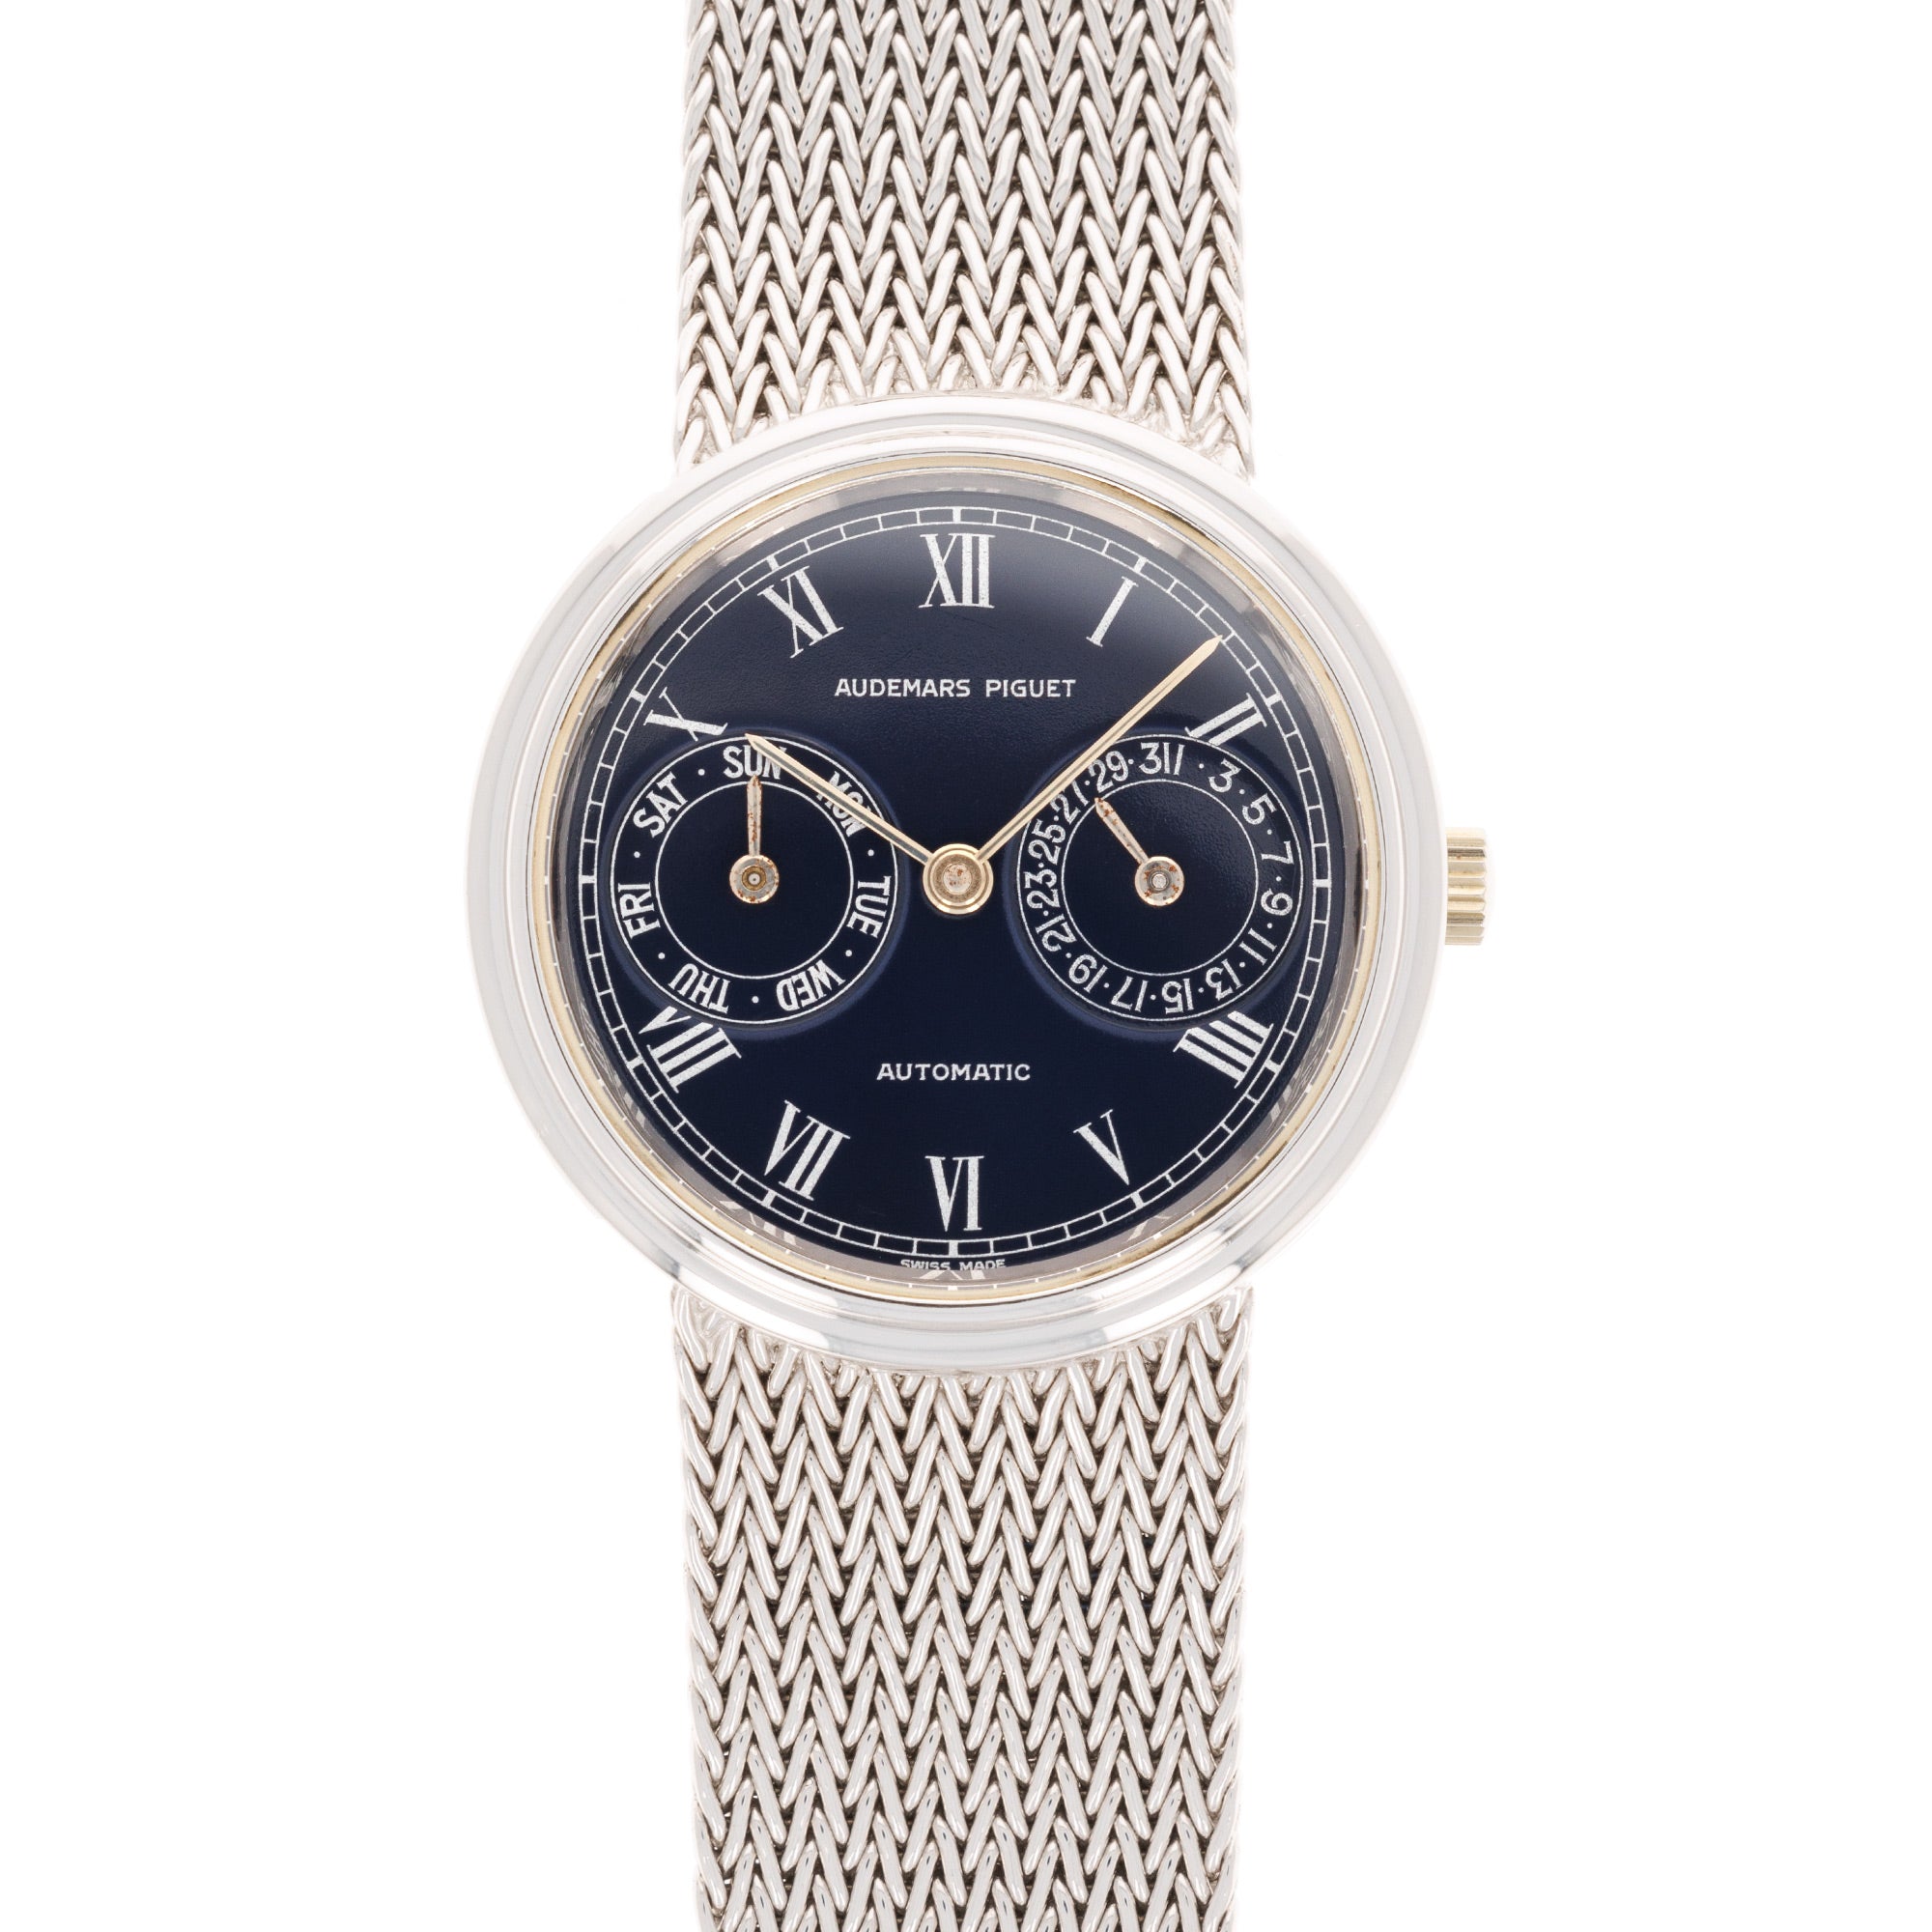 Audemars Piguet - Audemars Piguet White Gold Day-Date Watch Ref. 25574 - The Keystone Watches